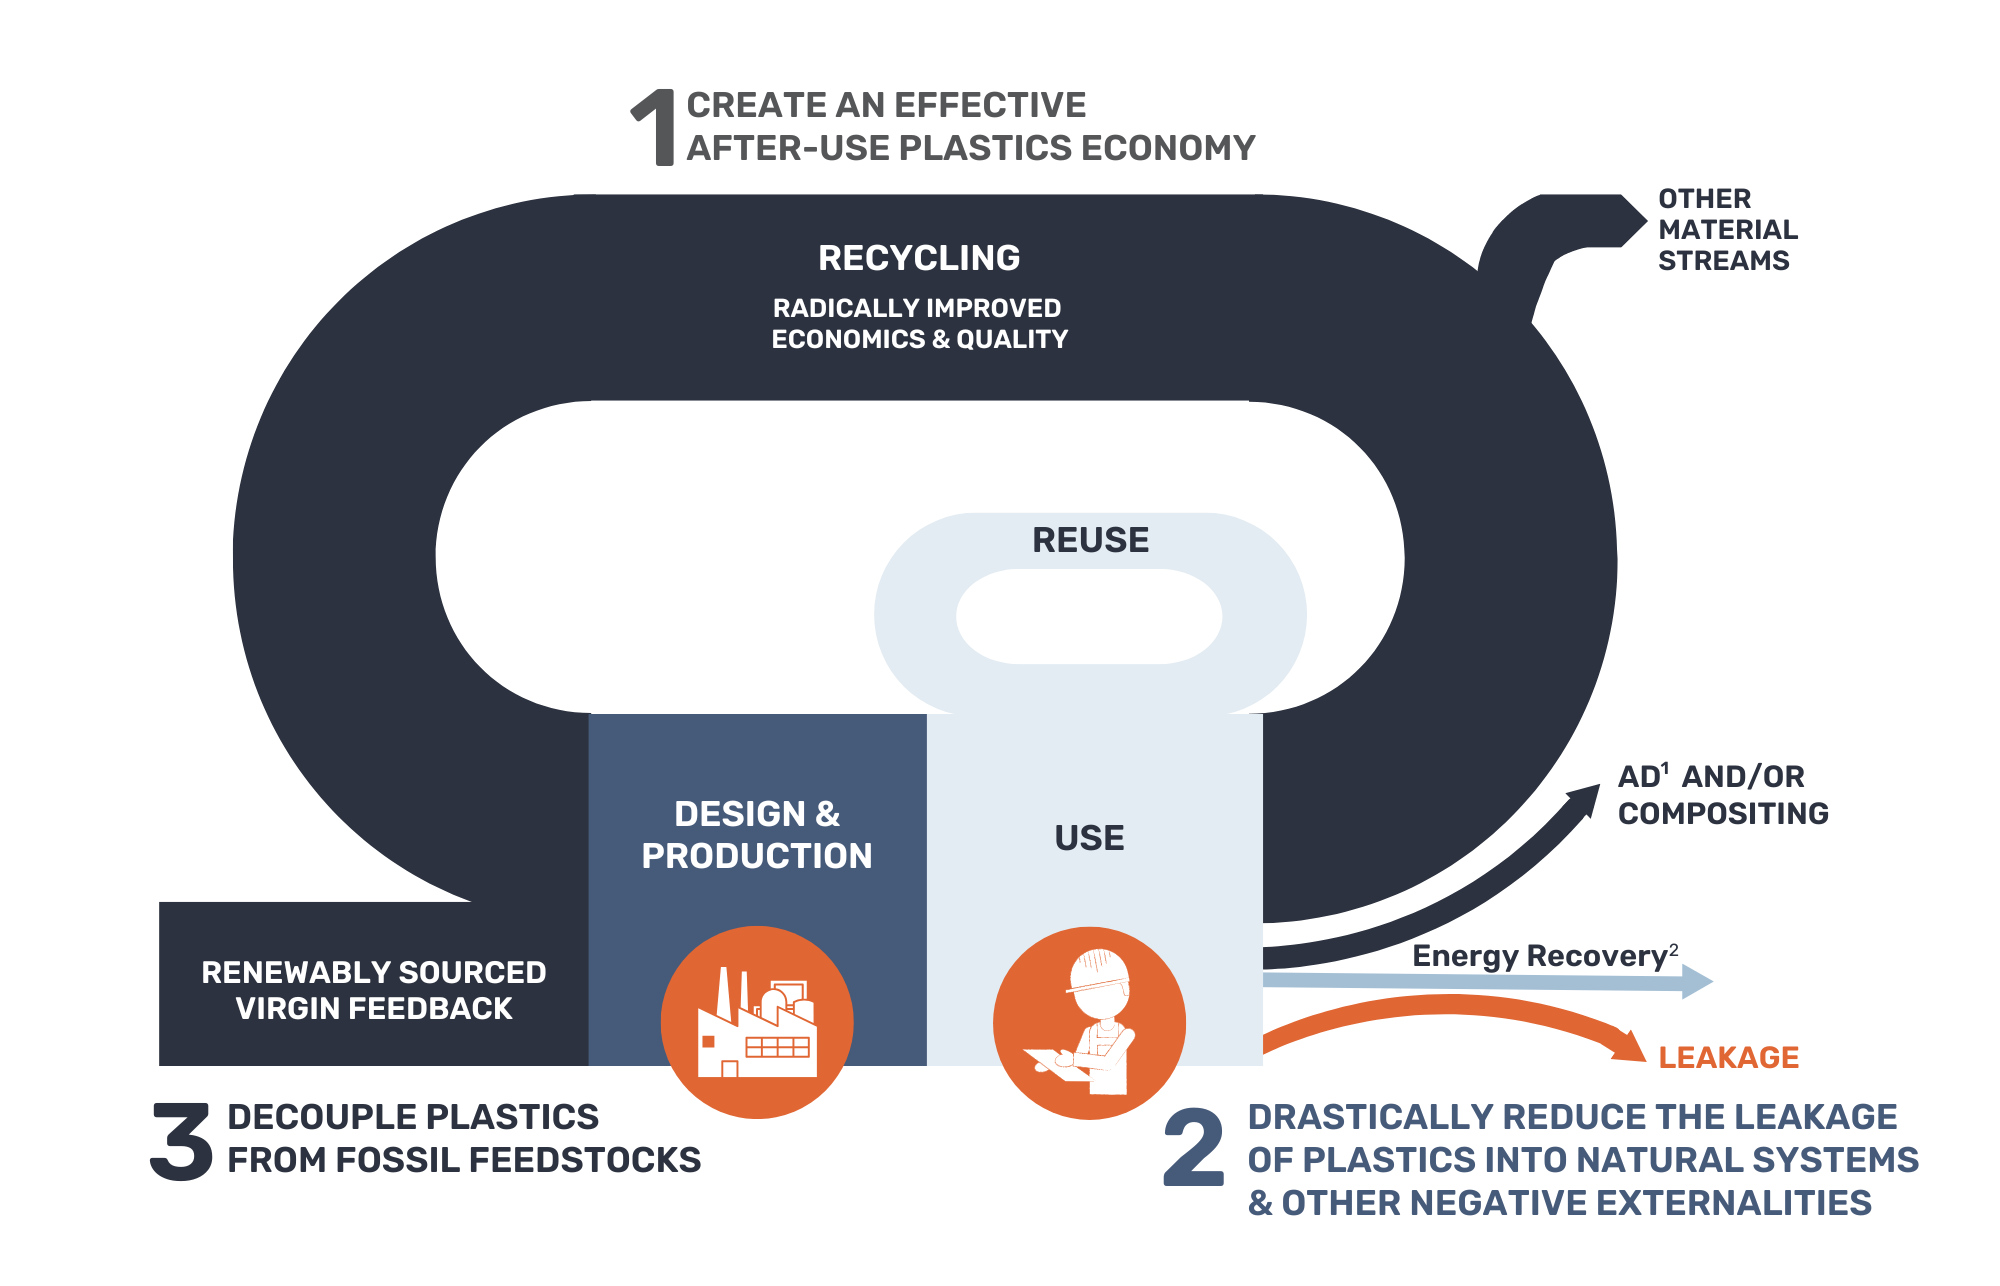 Is bio based plastic circular